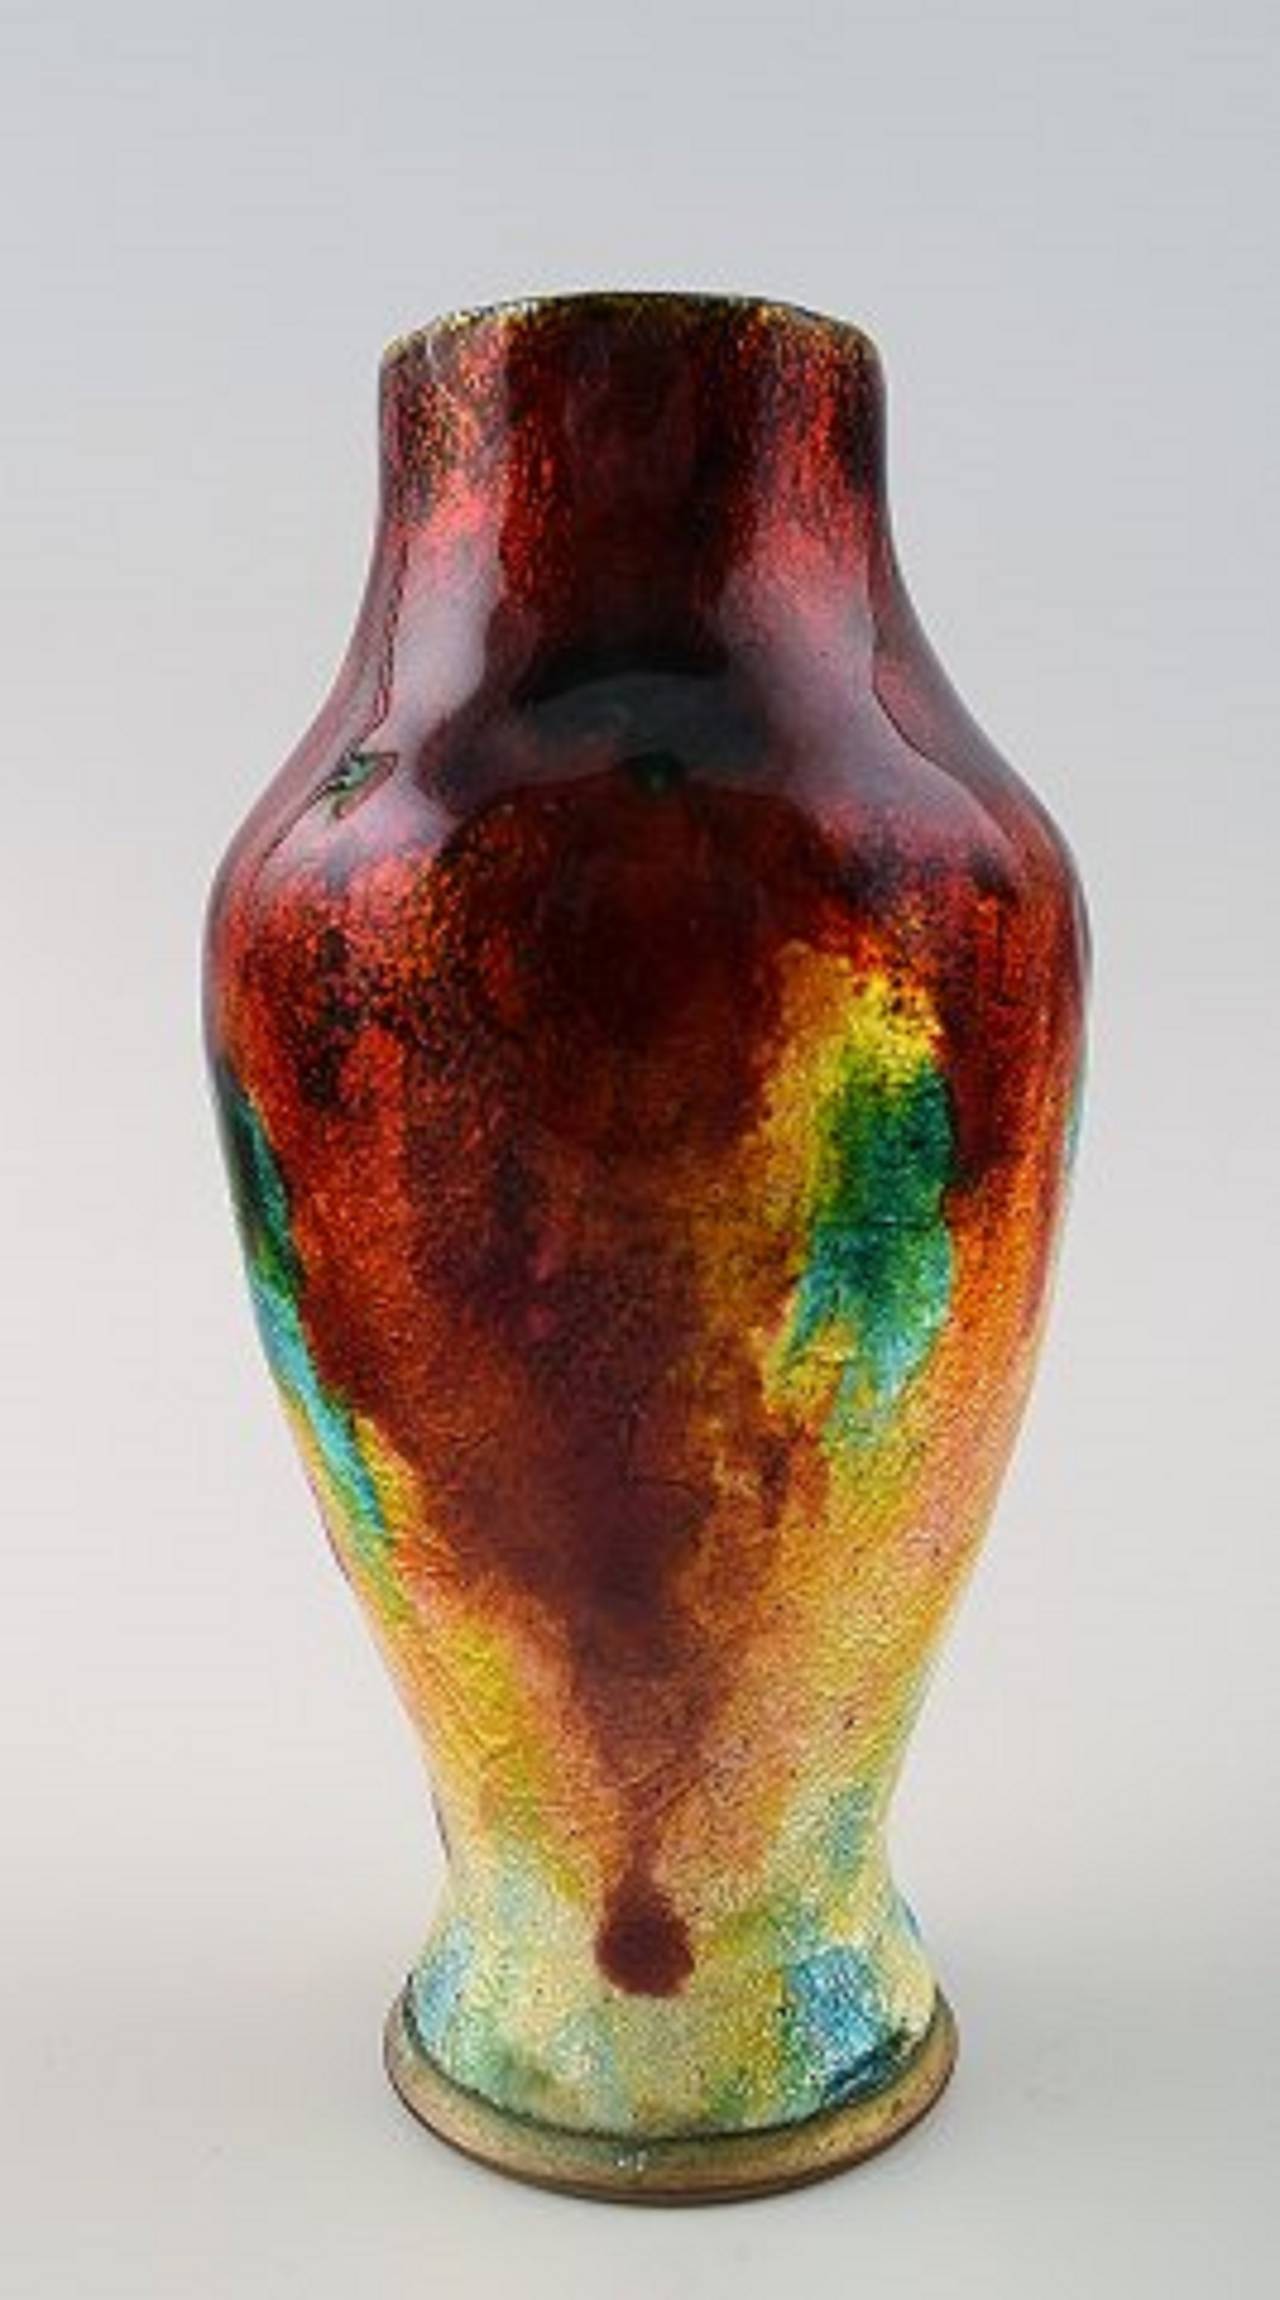 Art Nouveau Limoges vase by Faure´ Marty, France.
Enamel bronze vase, glaze in many colors.
Signed.
An excellent Art Nouveau vase of great quality, circa 1910s.
In perfect condition.
Size: 14 x 7.5cm.